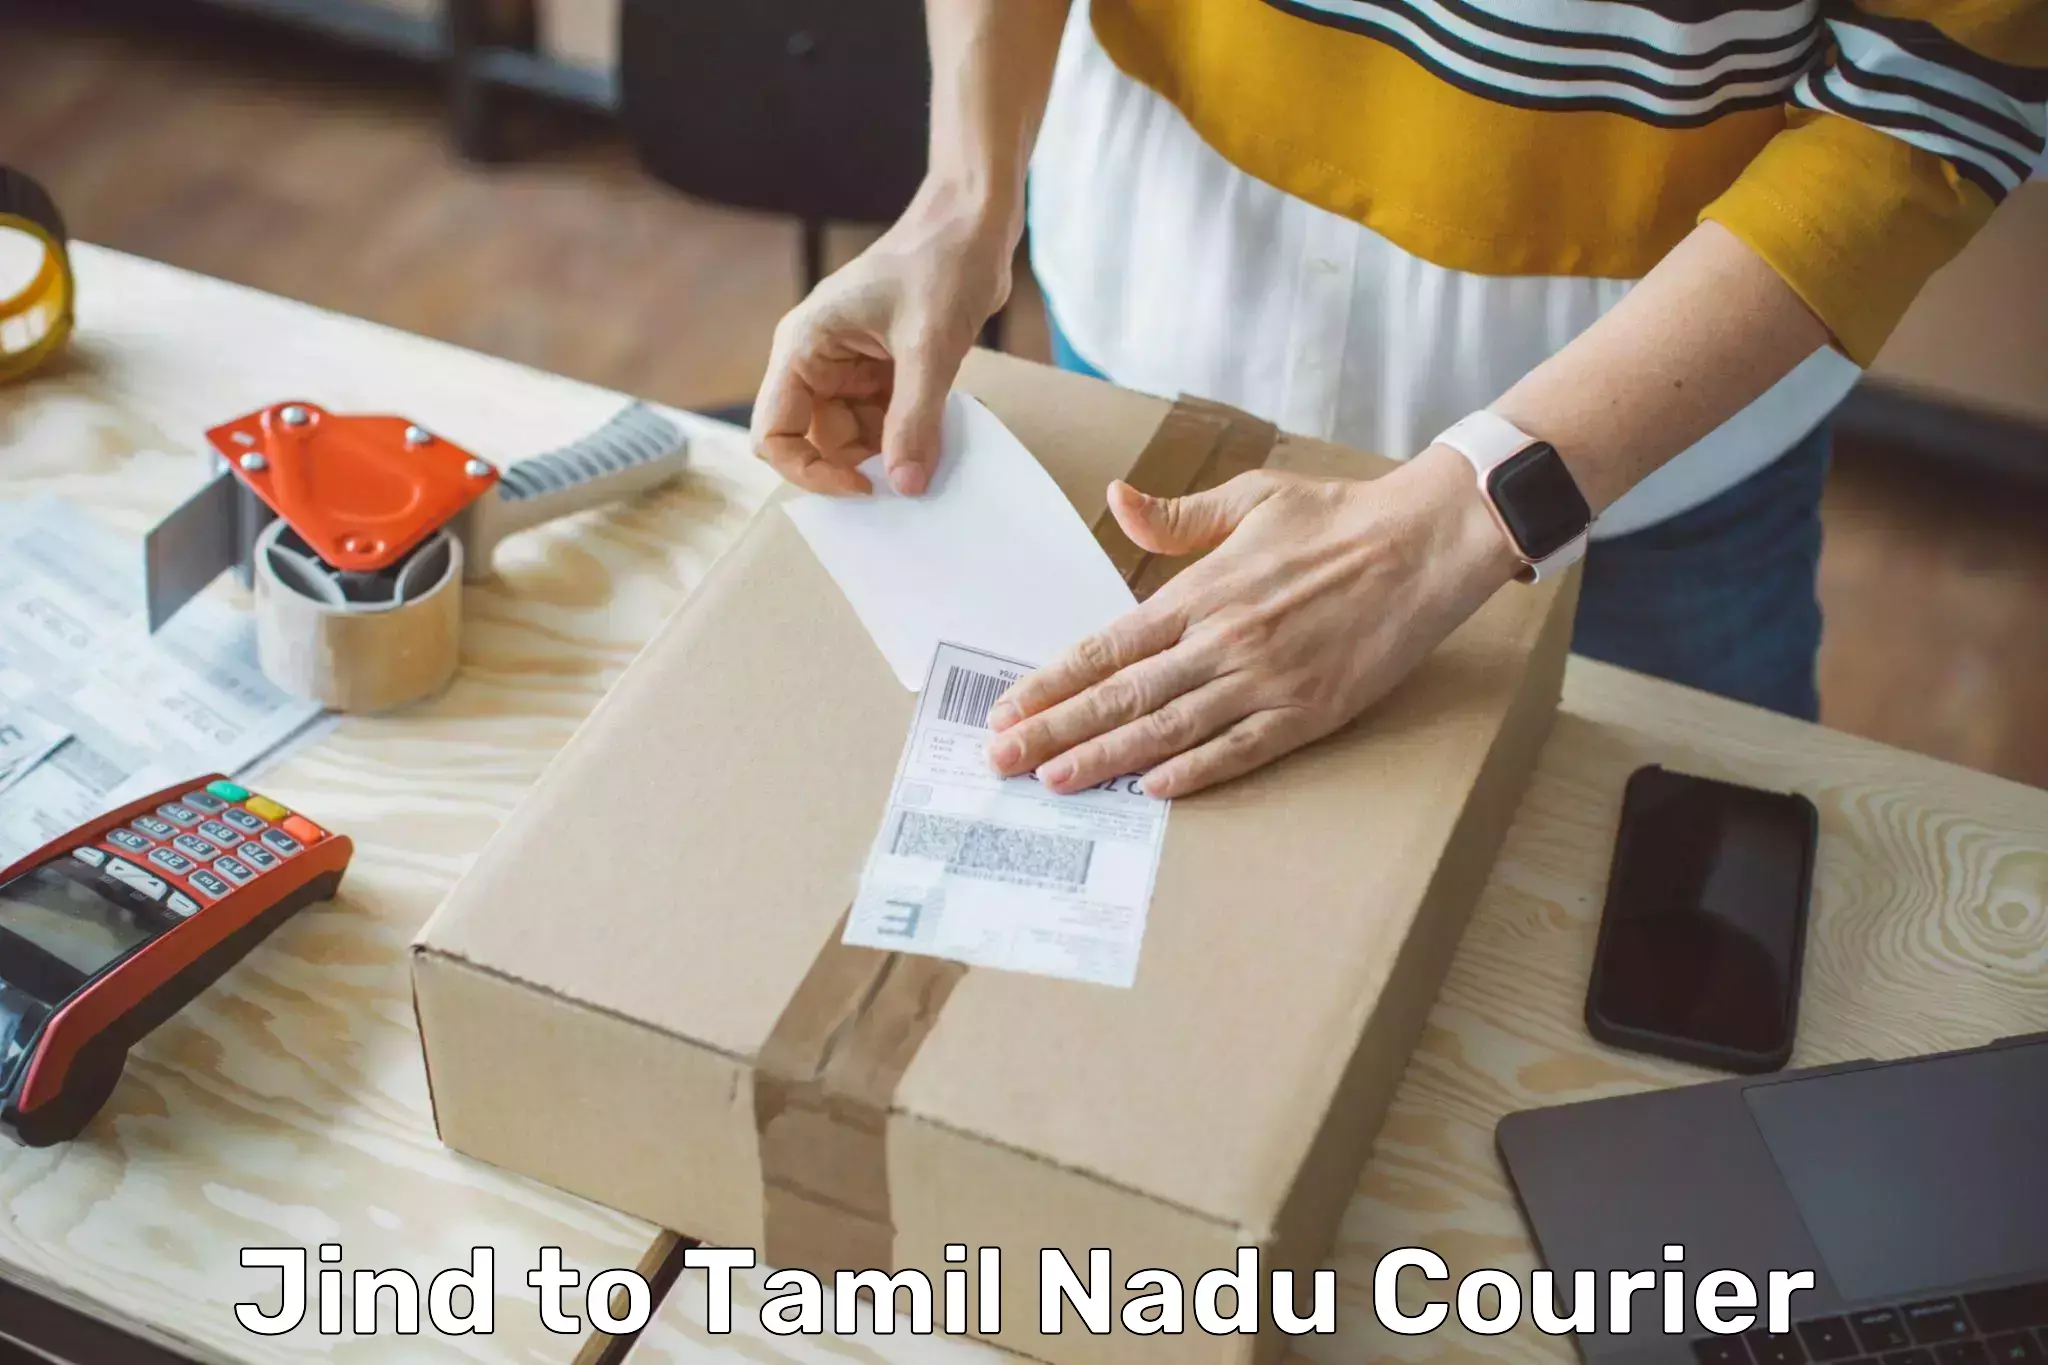 High-capacity parcel service Jind to Thiruvadanai